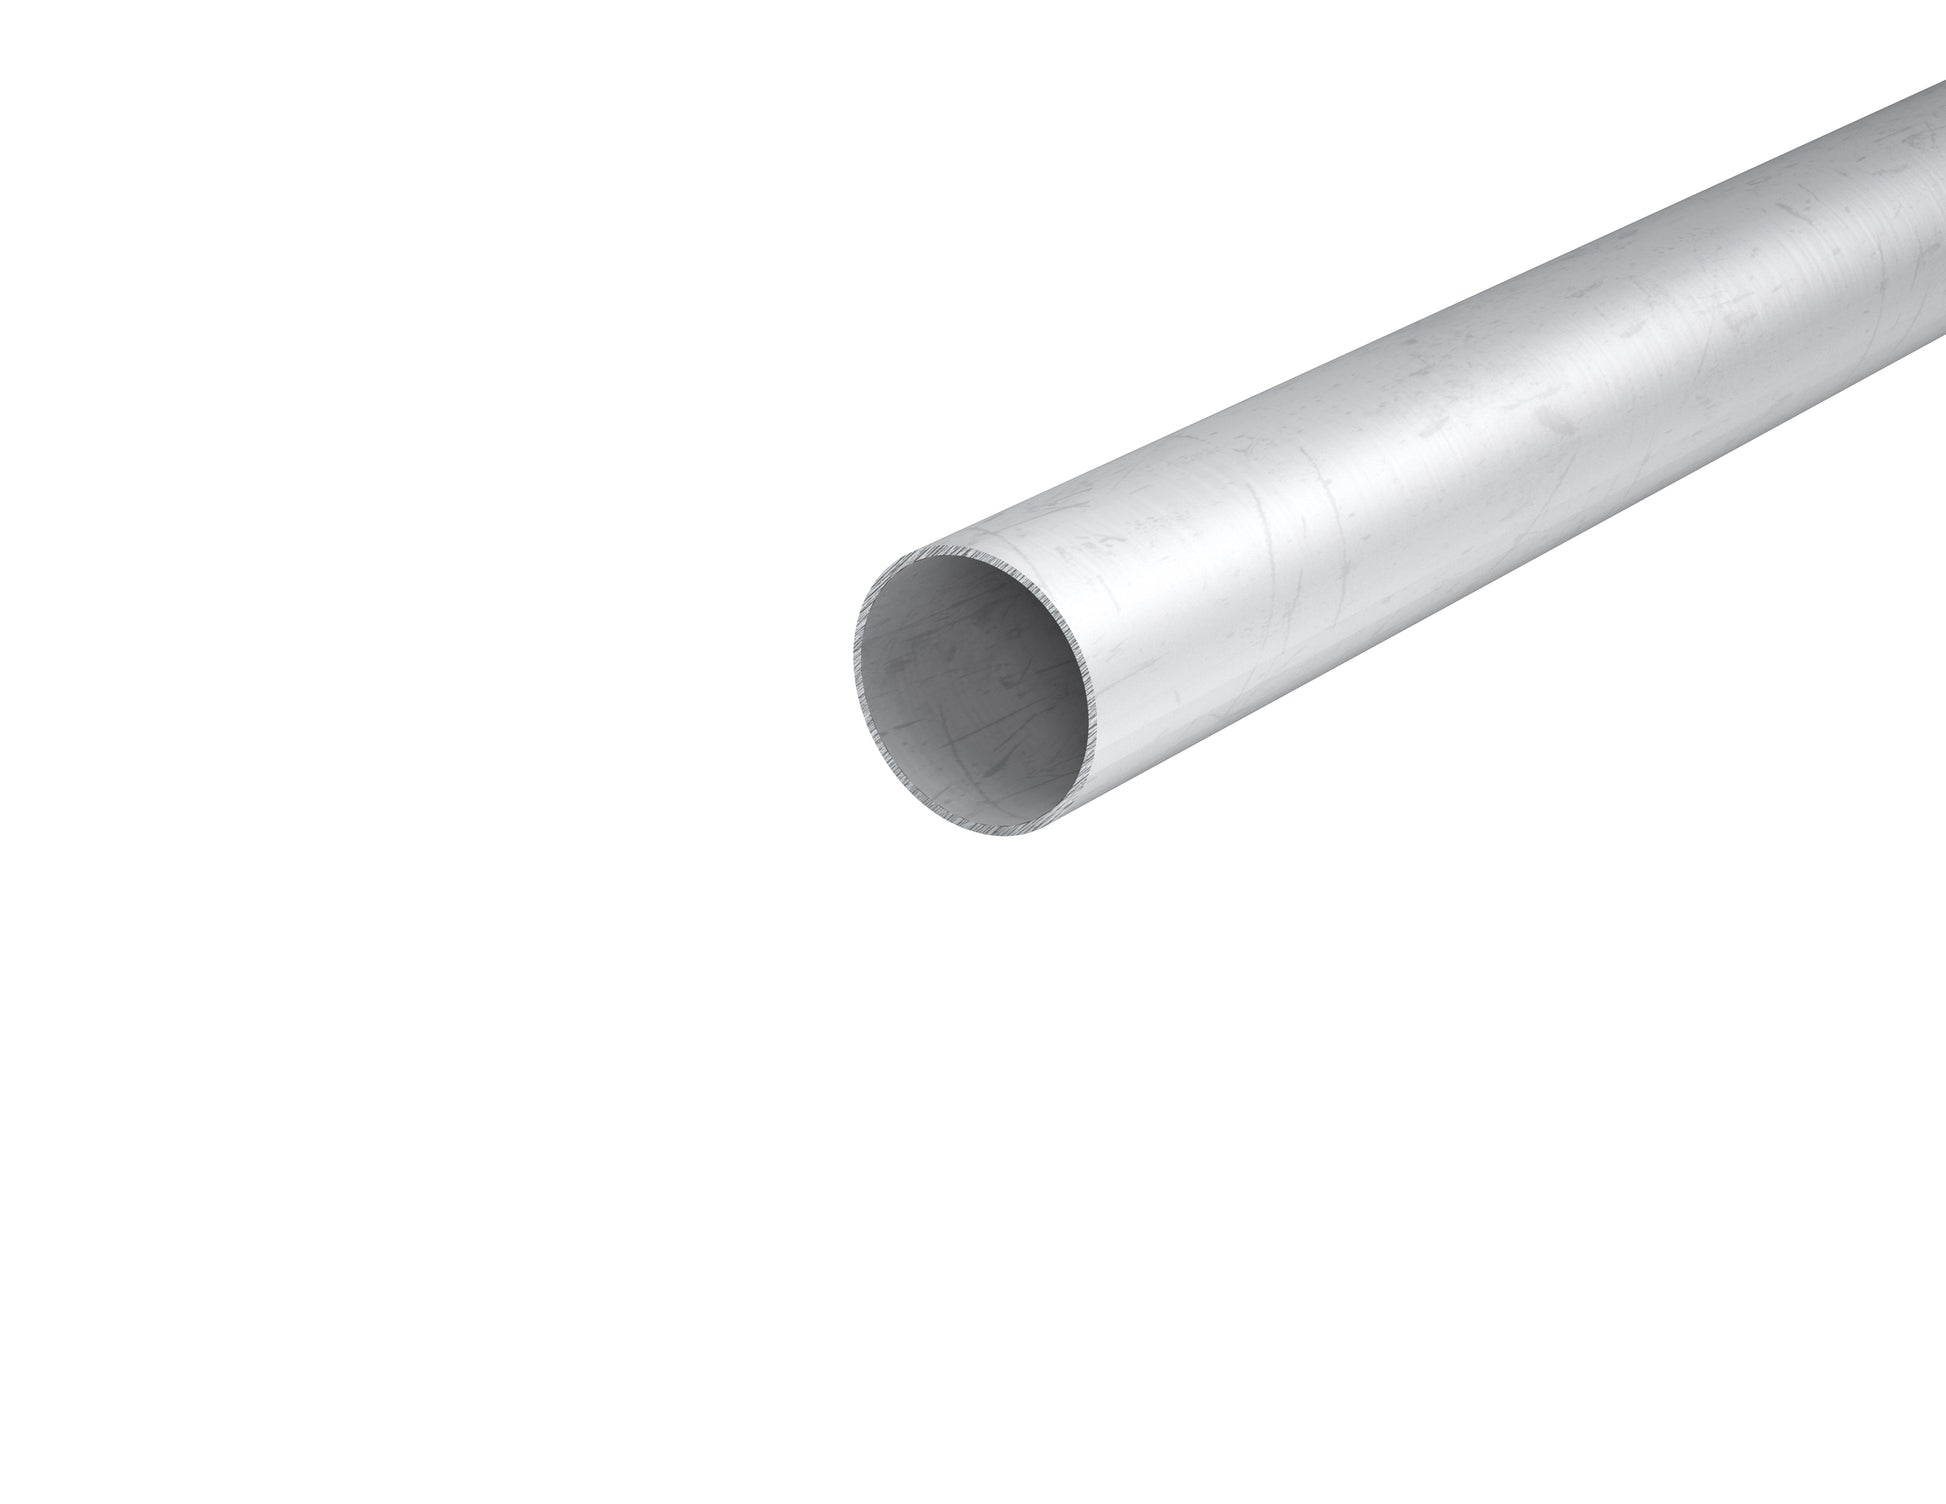 1-3/4" OD .058" wall round aluminum tube, 16 gauge 1.75" aluminum tube, 6063-T832 drawn .058" wall